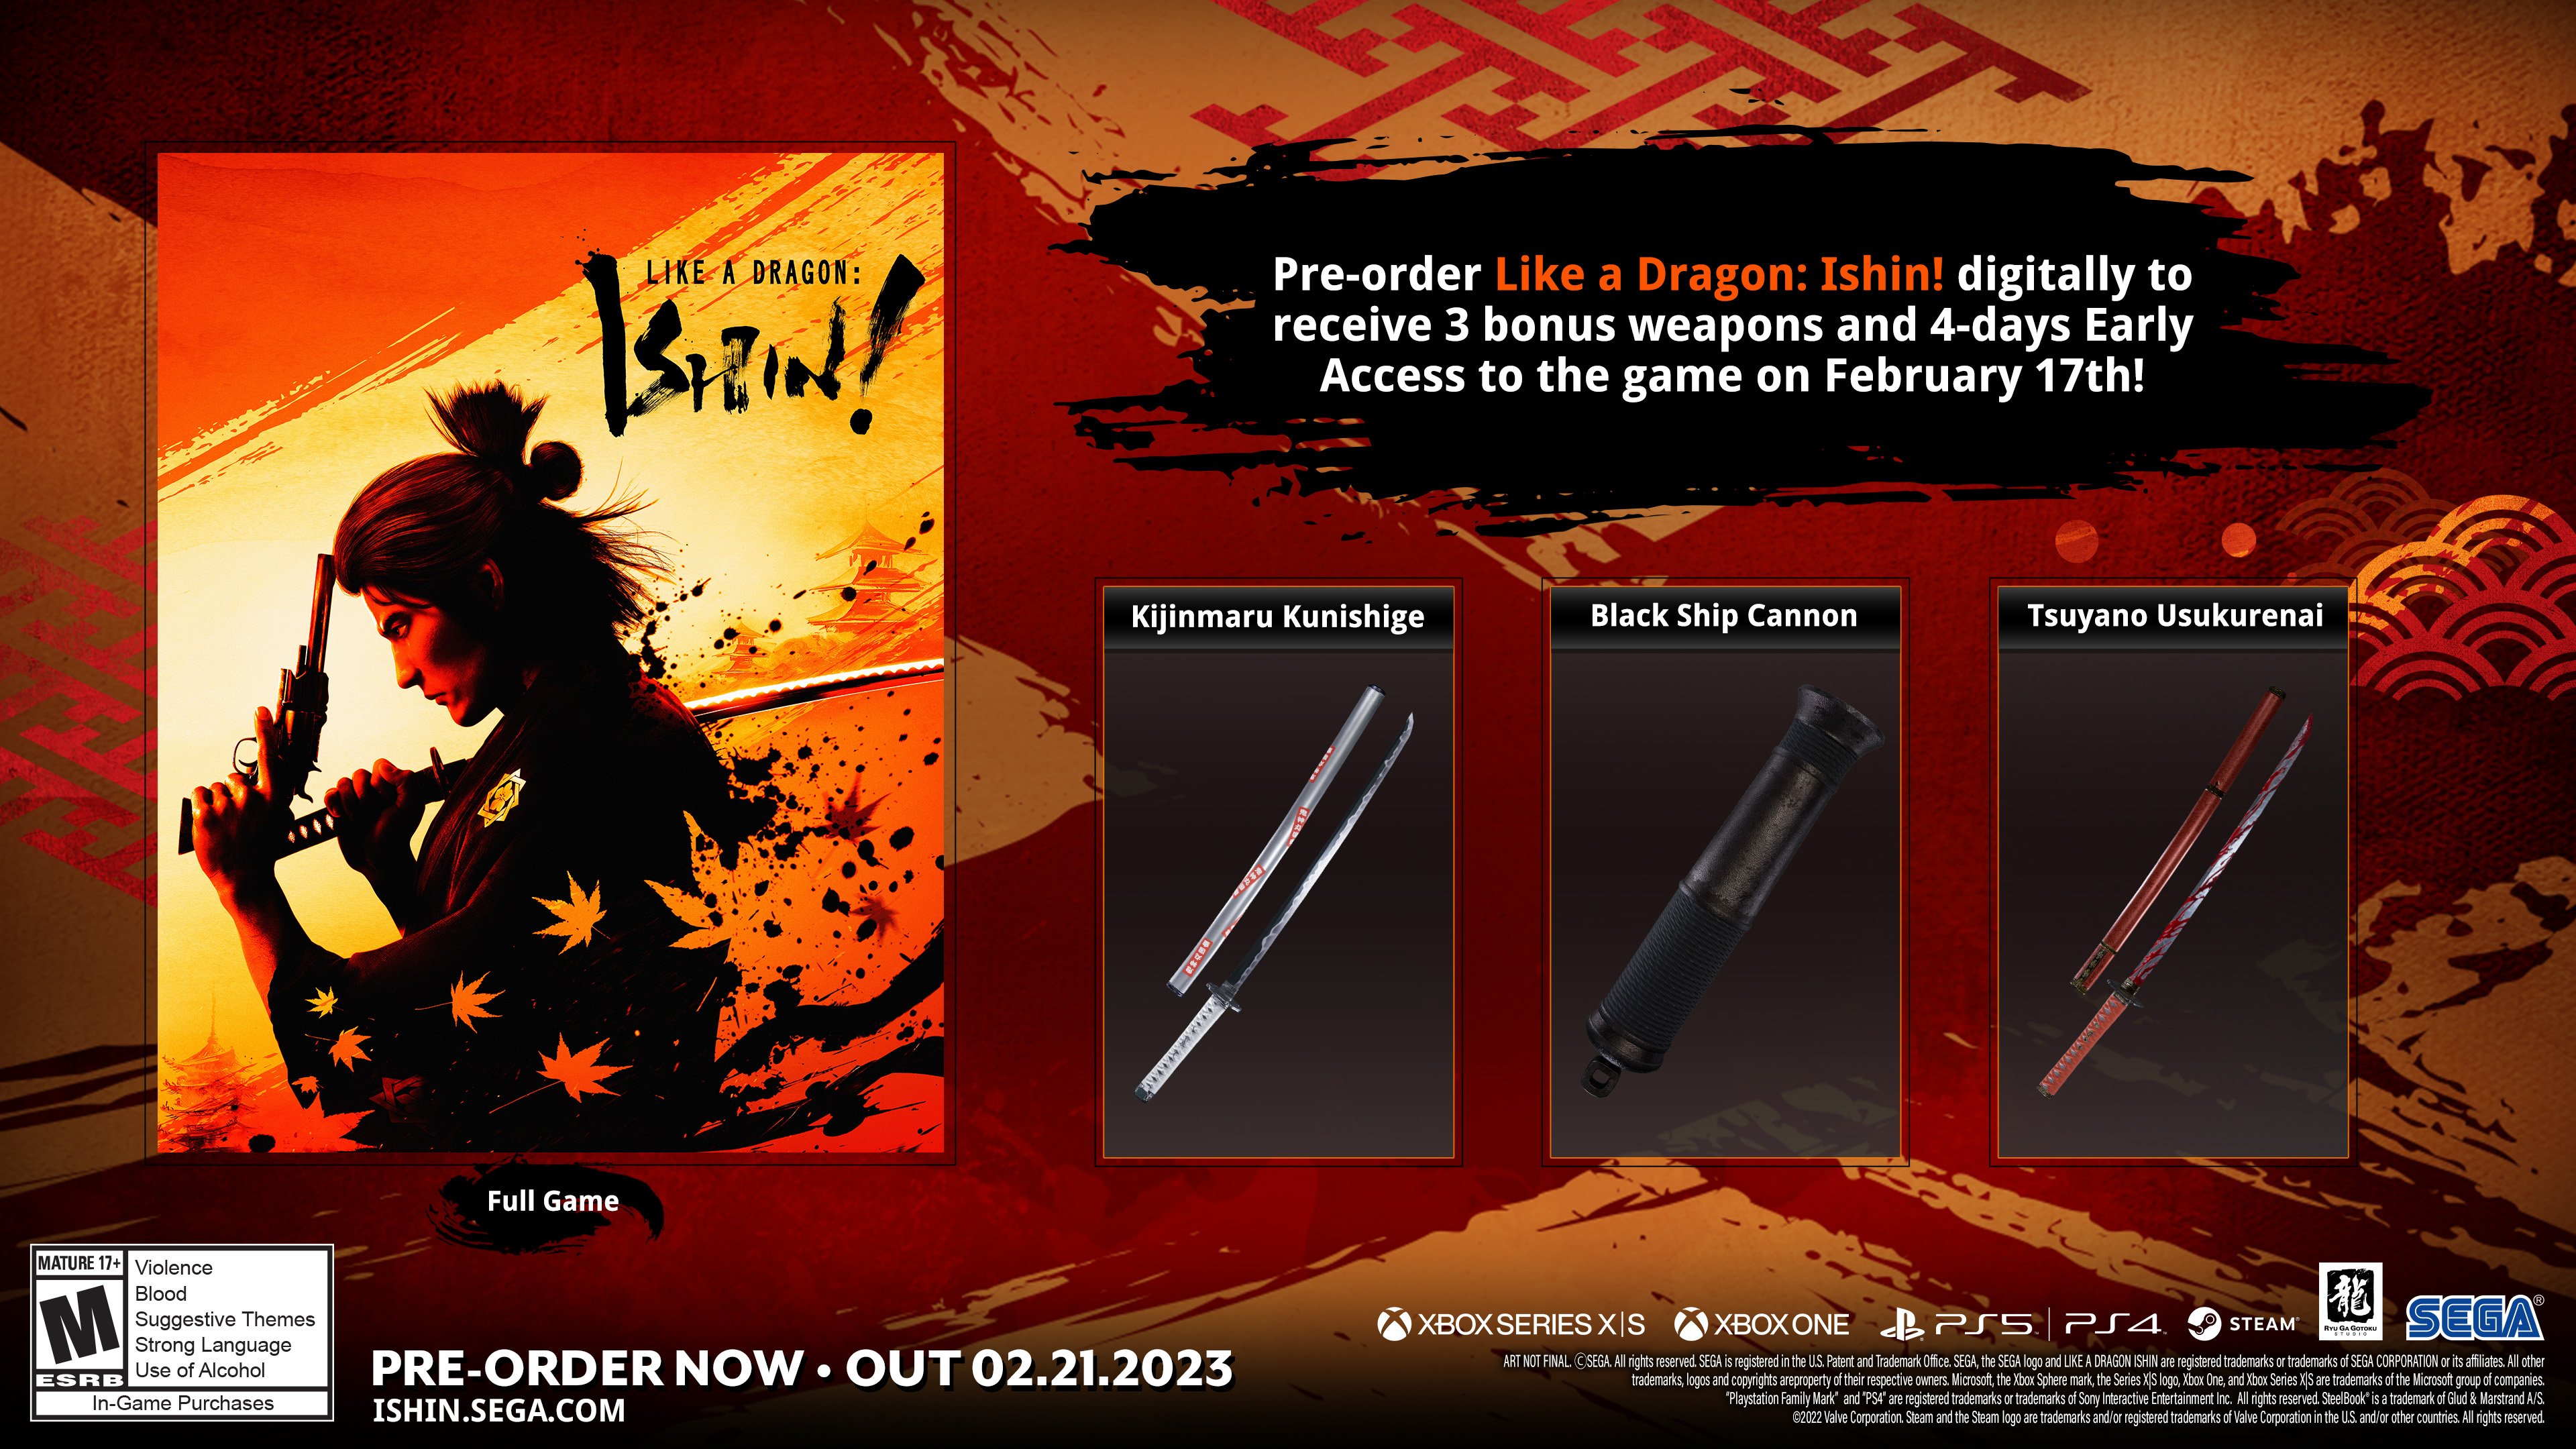 Image of Like a Dragon: Ishin's keyart along with three weapons that players will receive by pre-ordering digitally. A Kijinmaru Kunishige Sword, a Black Ship Cannon, and a Tsuyano Usukurenai Sword.